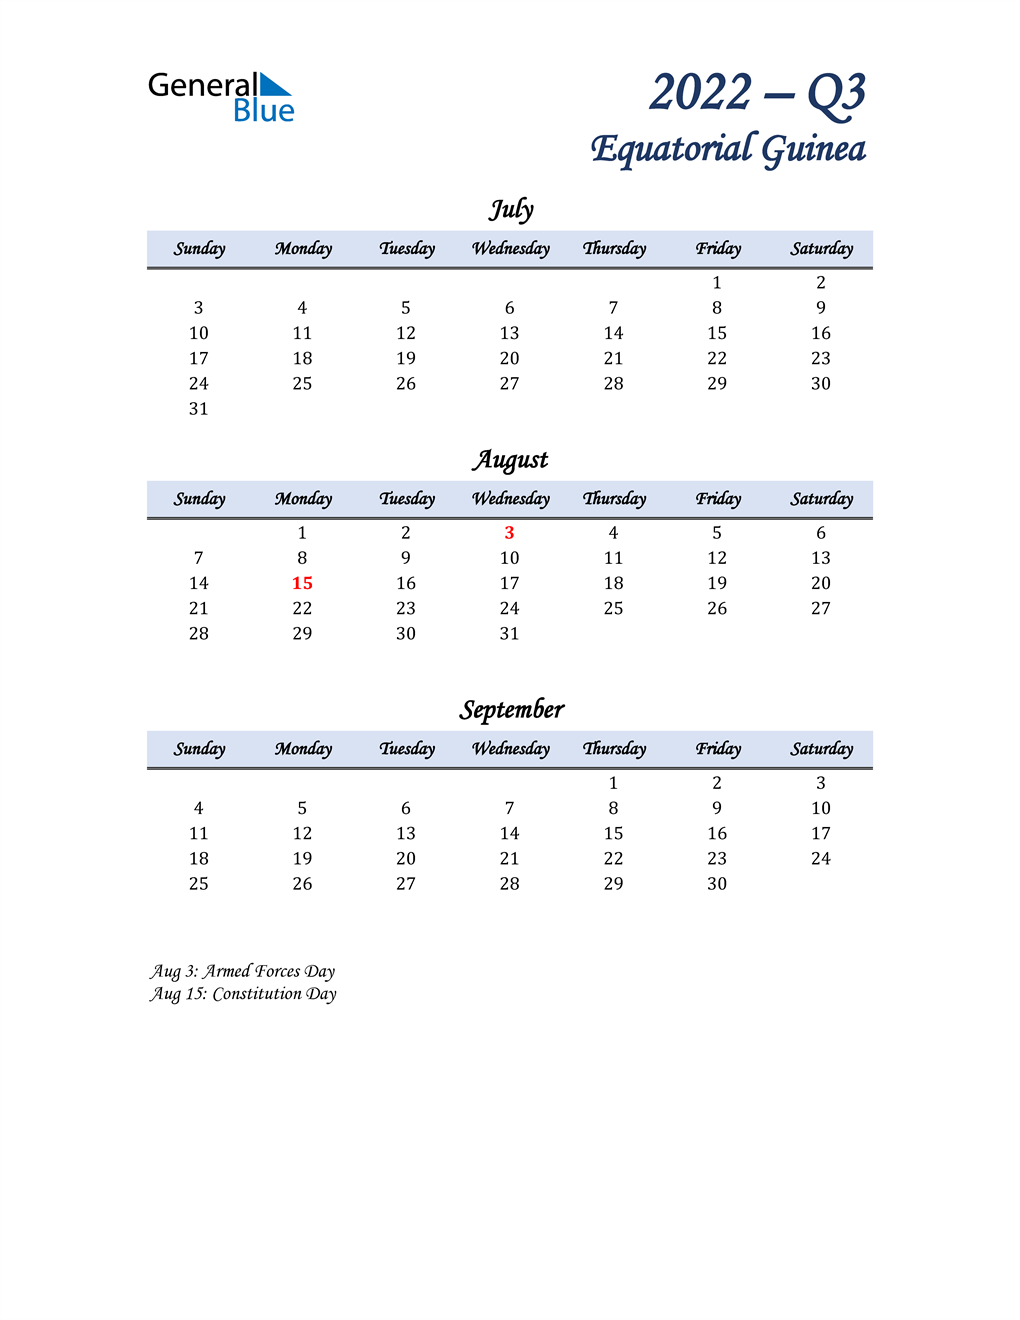  July, August, and September Calendar for Equatorial Guinea